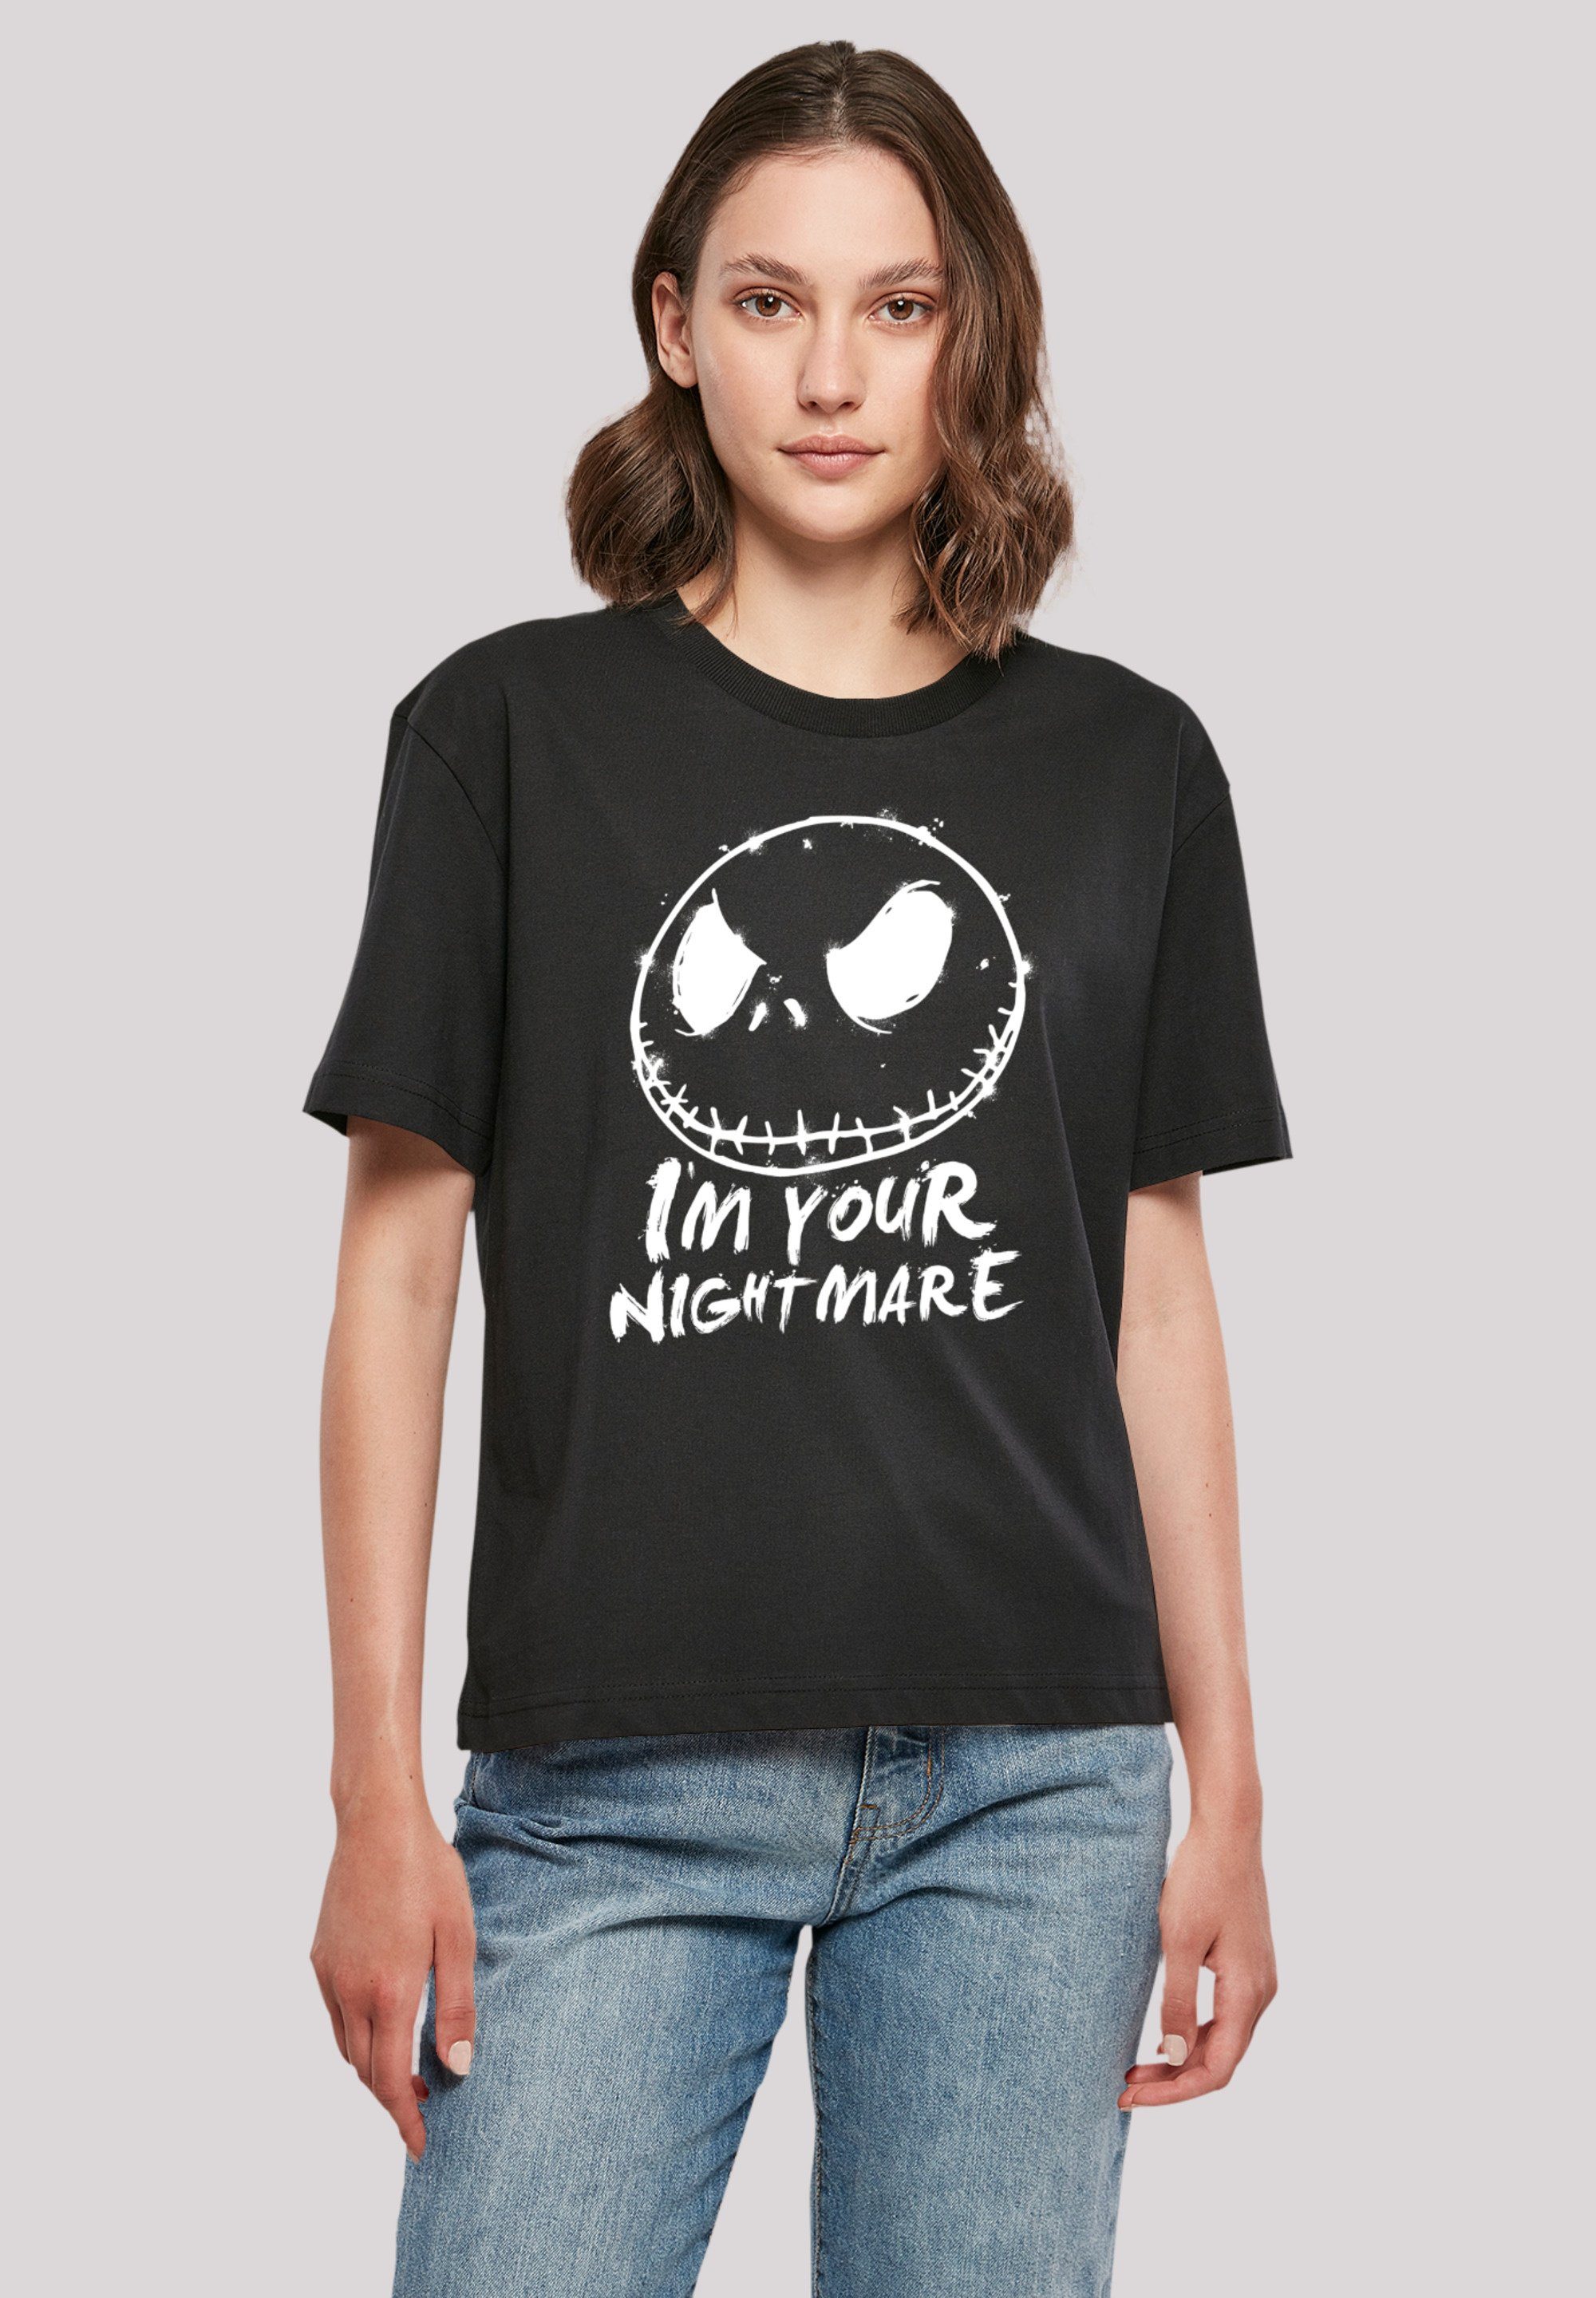 T-Shirt Before Splatter Disney Premium F4NT4STIC Nightmare Nightmare Qualität Christmas